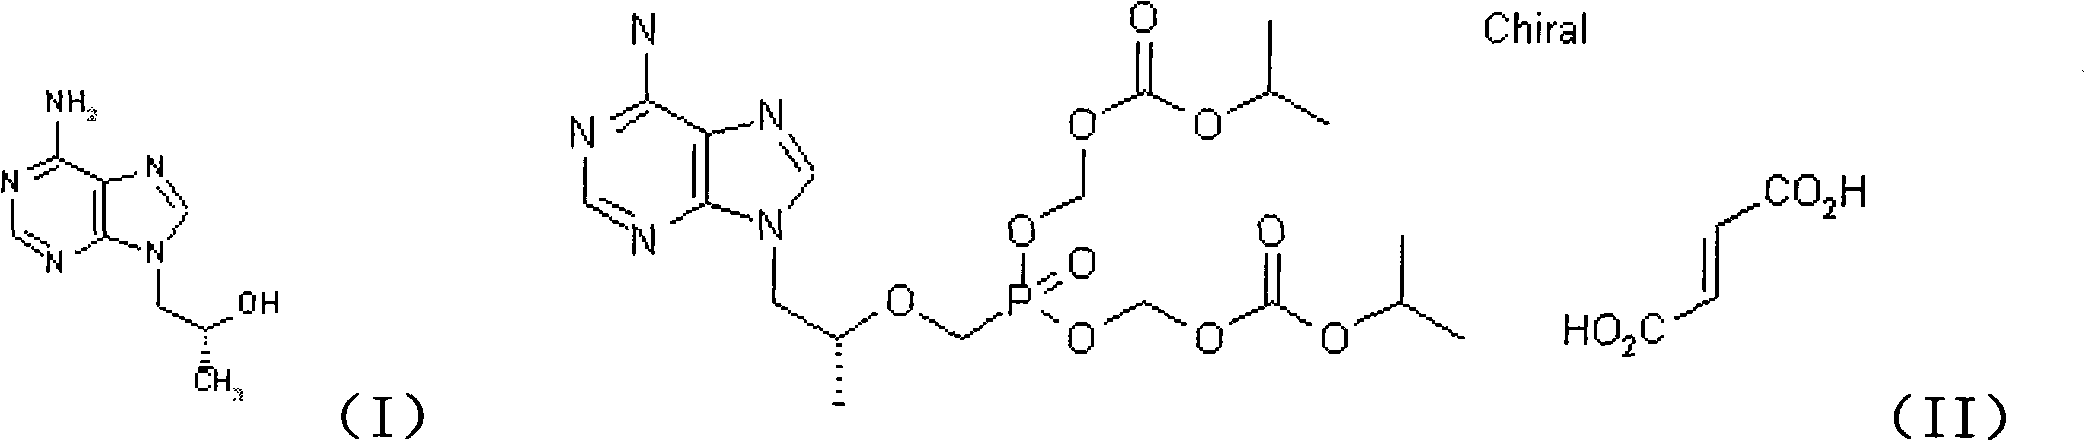 Novel method for synthesizing 9-substituted adenine compound